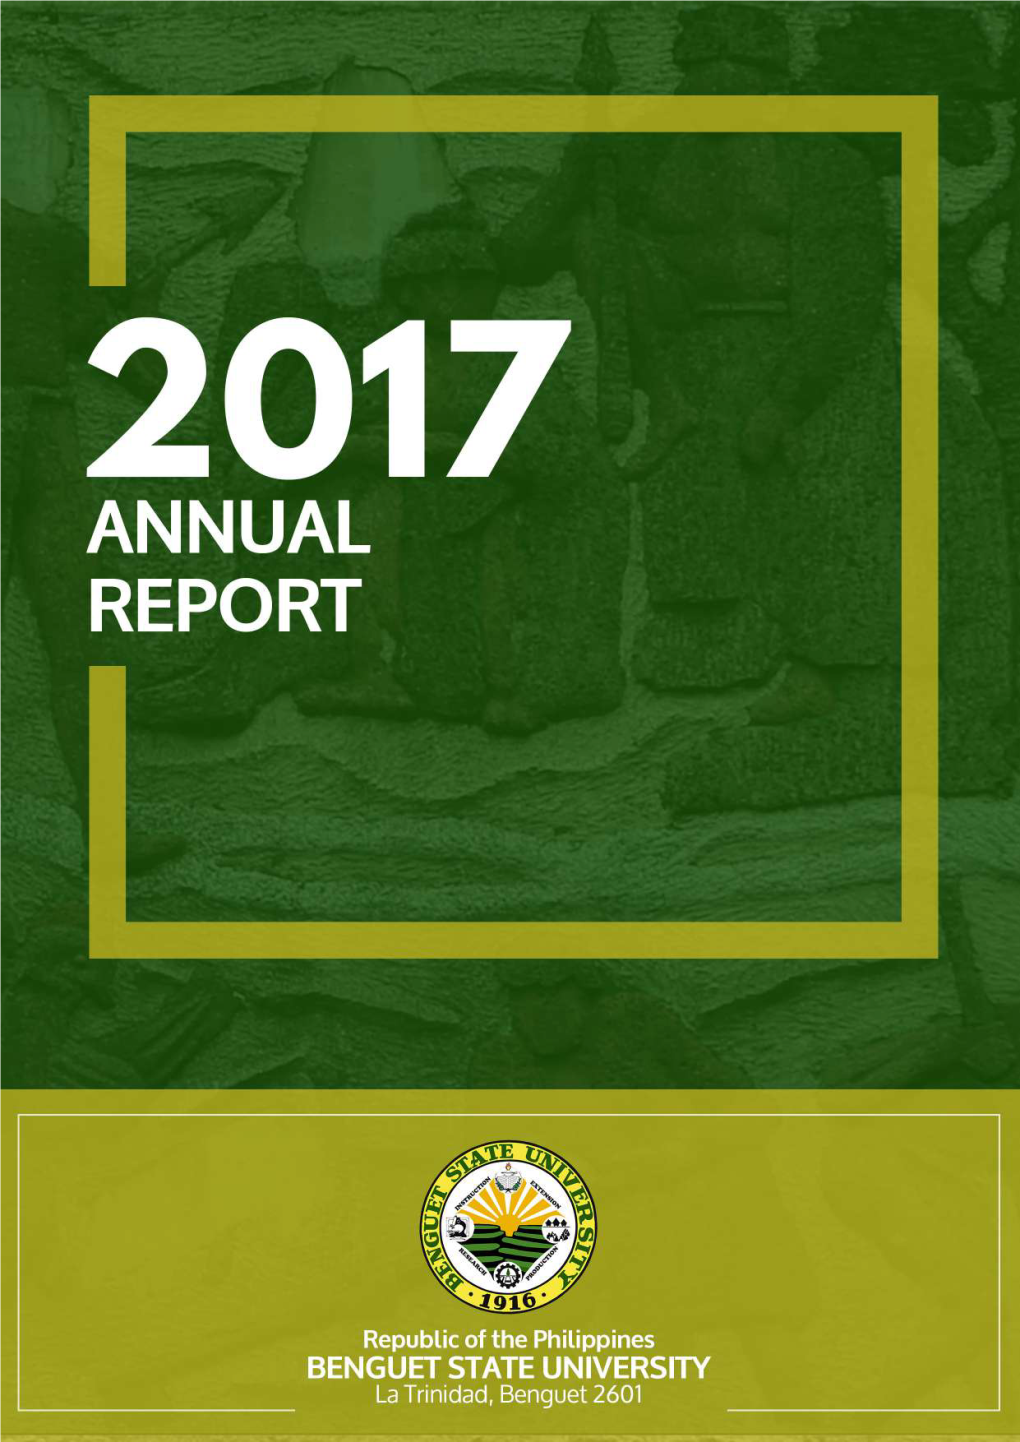 ANNUAL REPORT 2017 Republic of the Philippines BENGUET STATE UNIVERSITY La Trinidad, Benguet